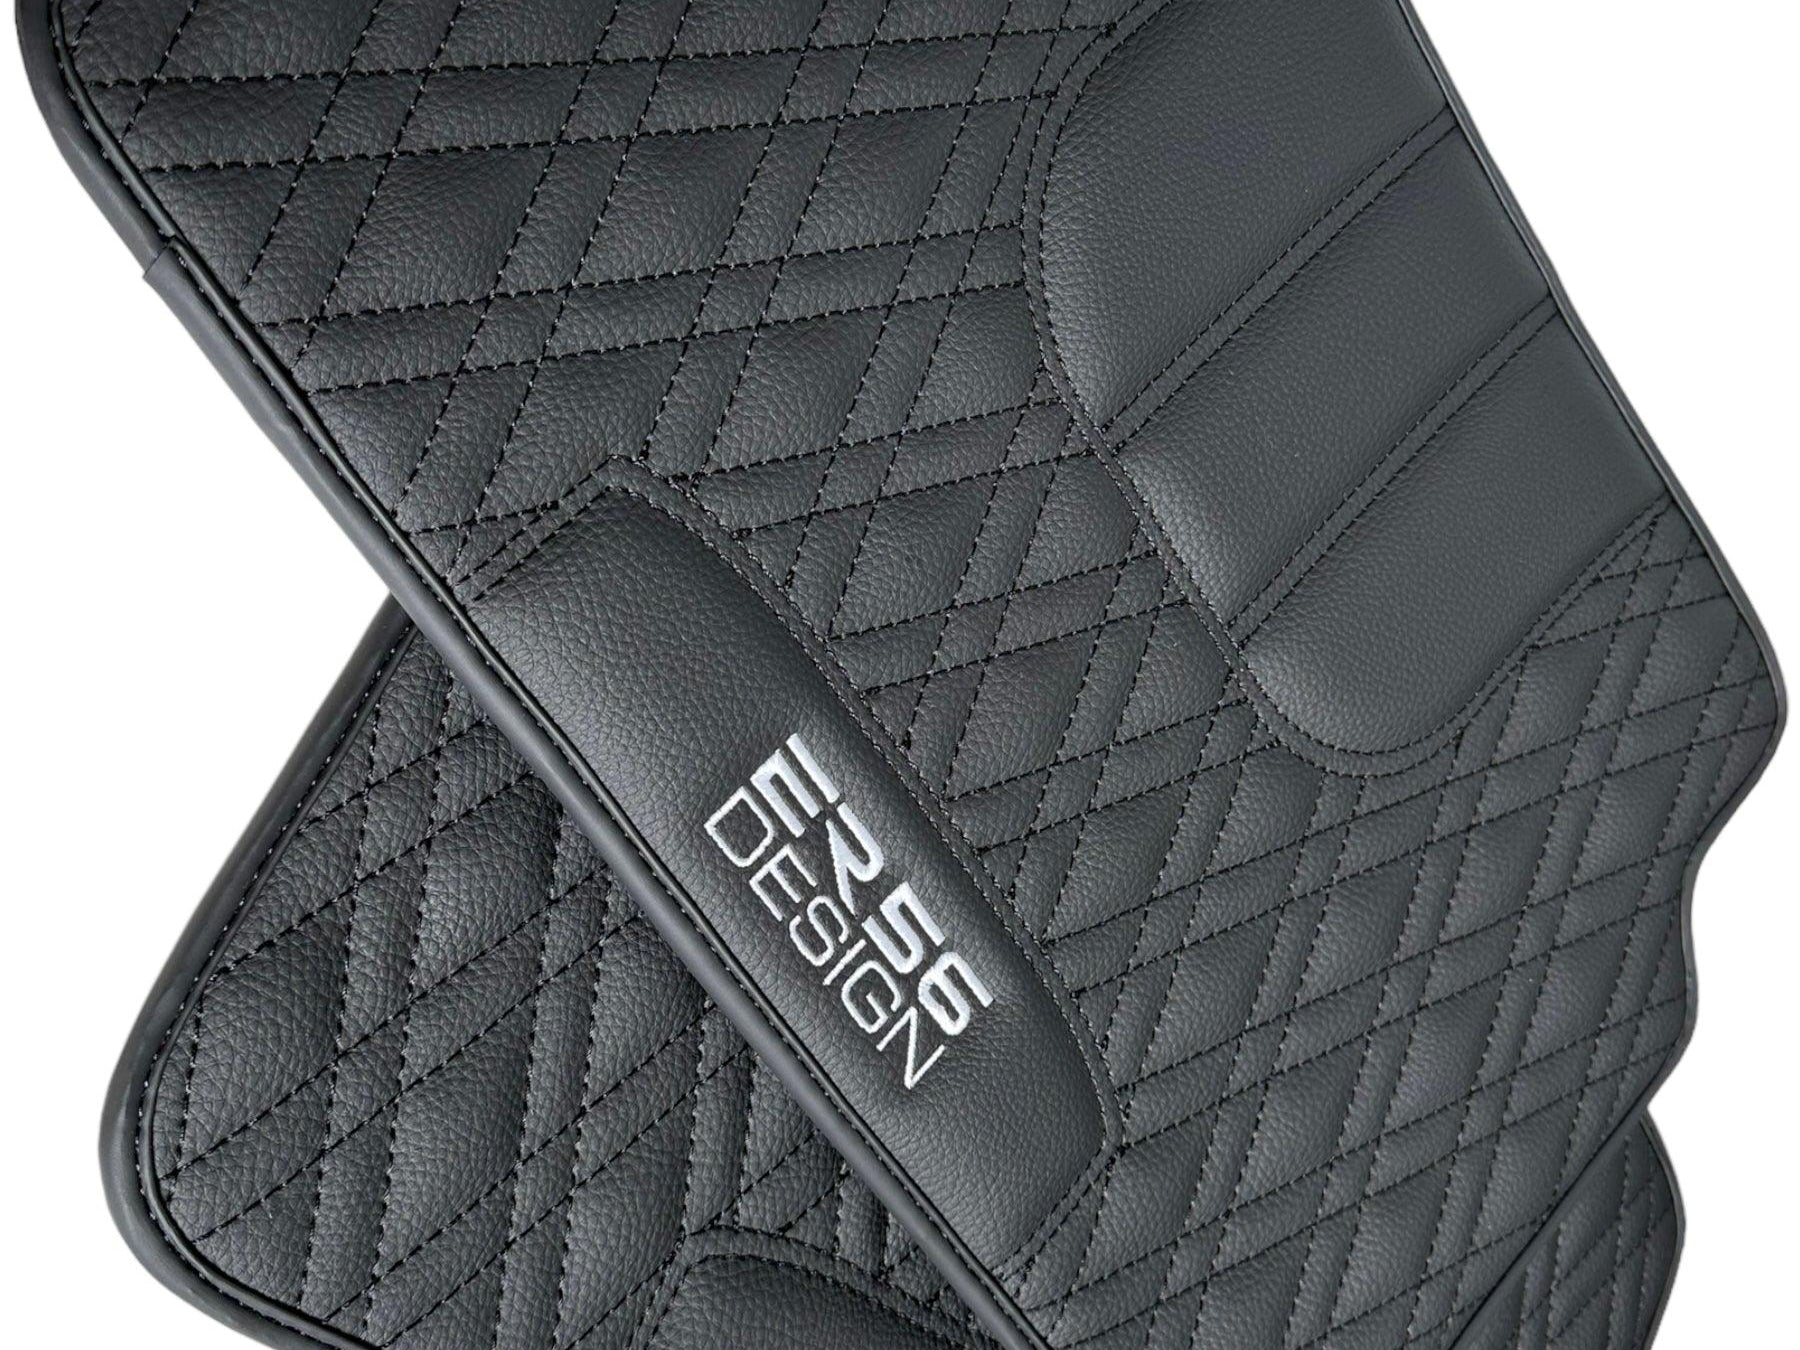 Floor Mats For BMW 3 Series E92 Lci Black Leather Er56 Design - AutoWin